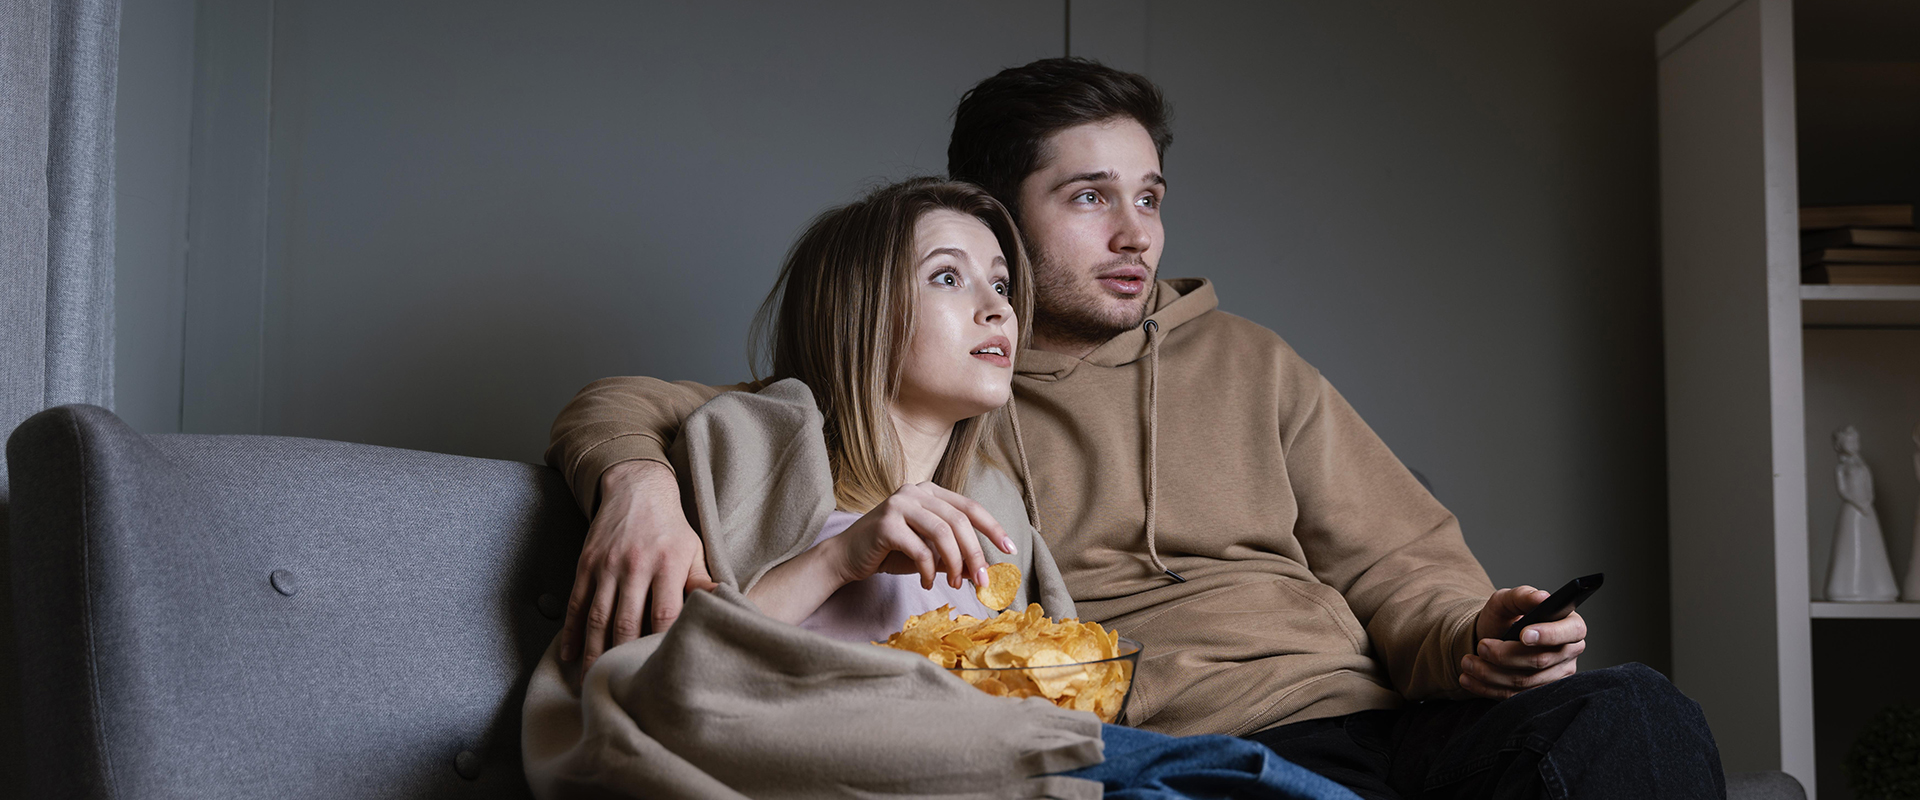 pareja-sofa-viendo-television-comiendo-patatas-fritas